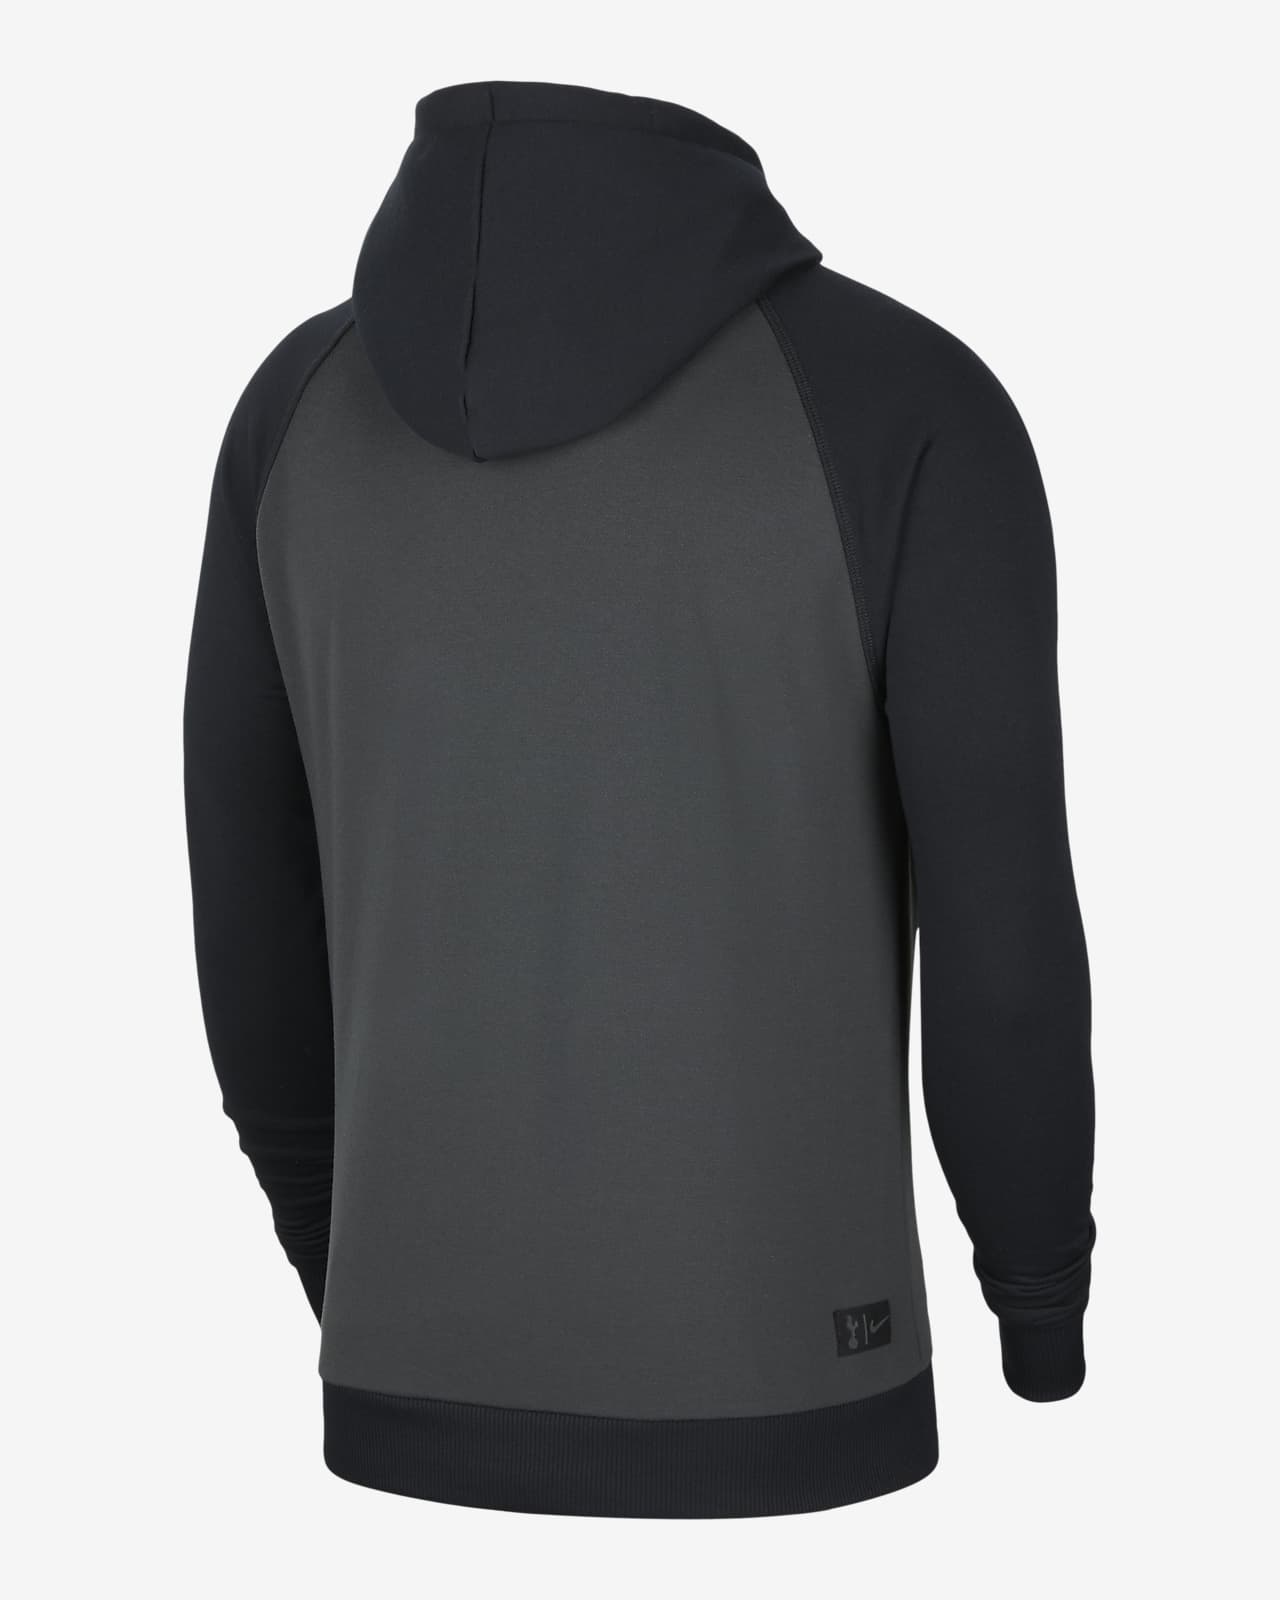 Nike公式 トッテナム ホットスパー メンズ プルオーバー サッカーパーカー オンラインストア 通販サイト